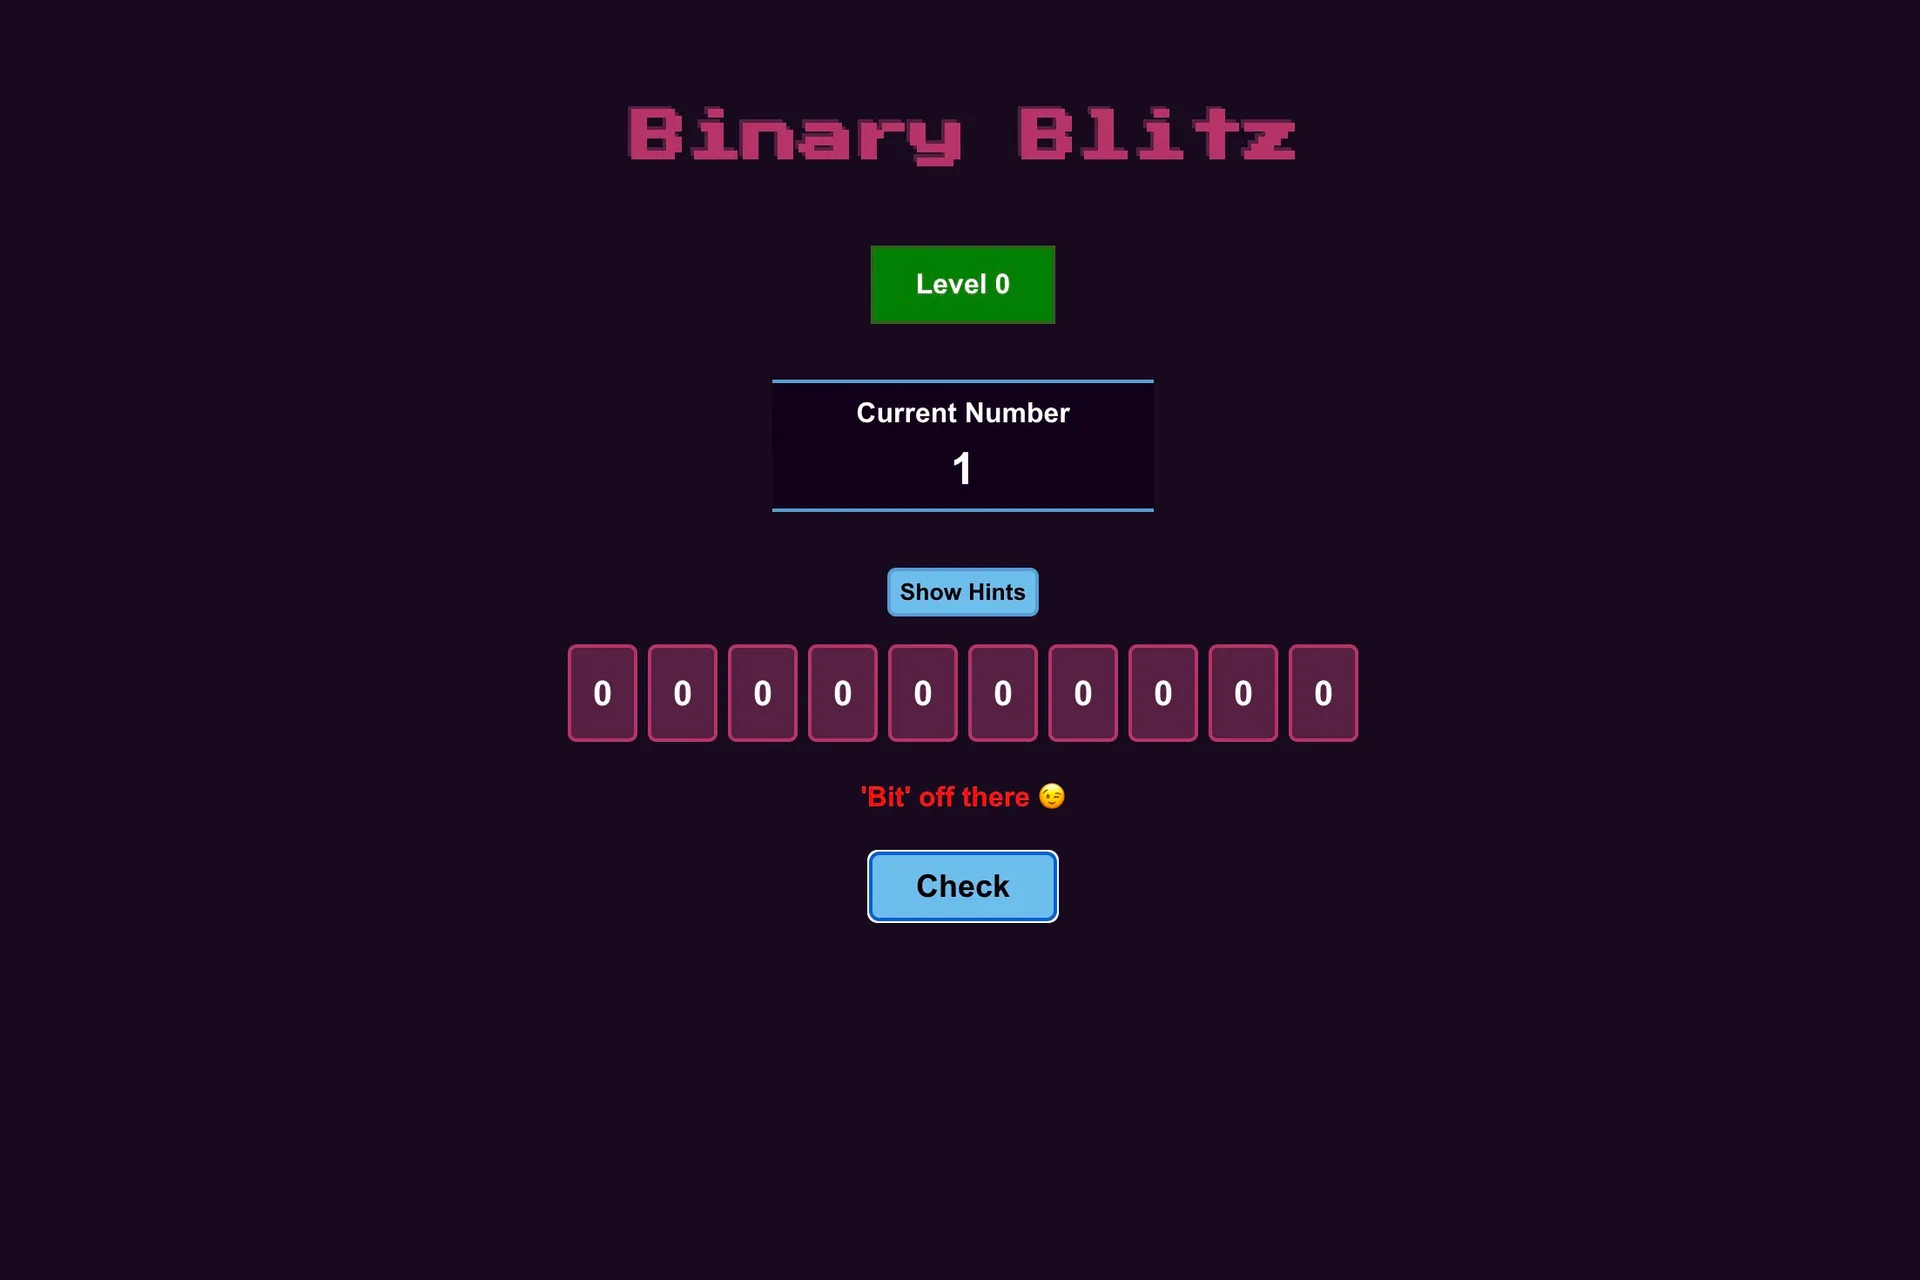 Binary Blitz losers screen